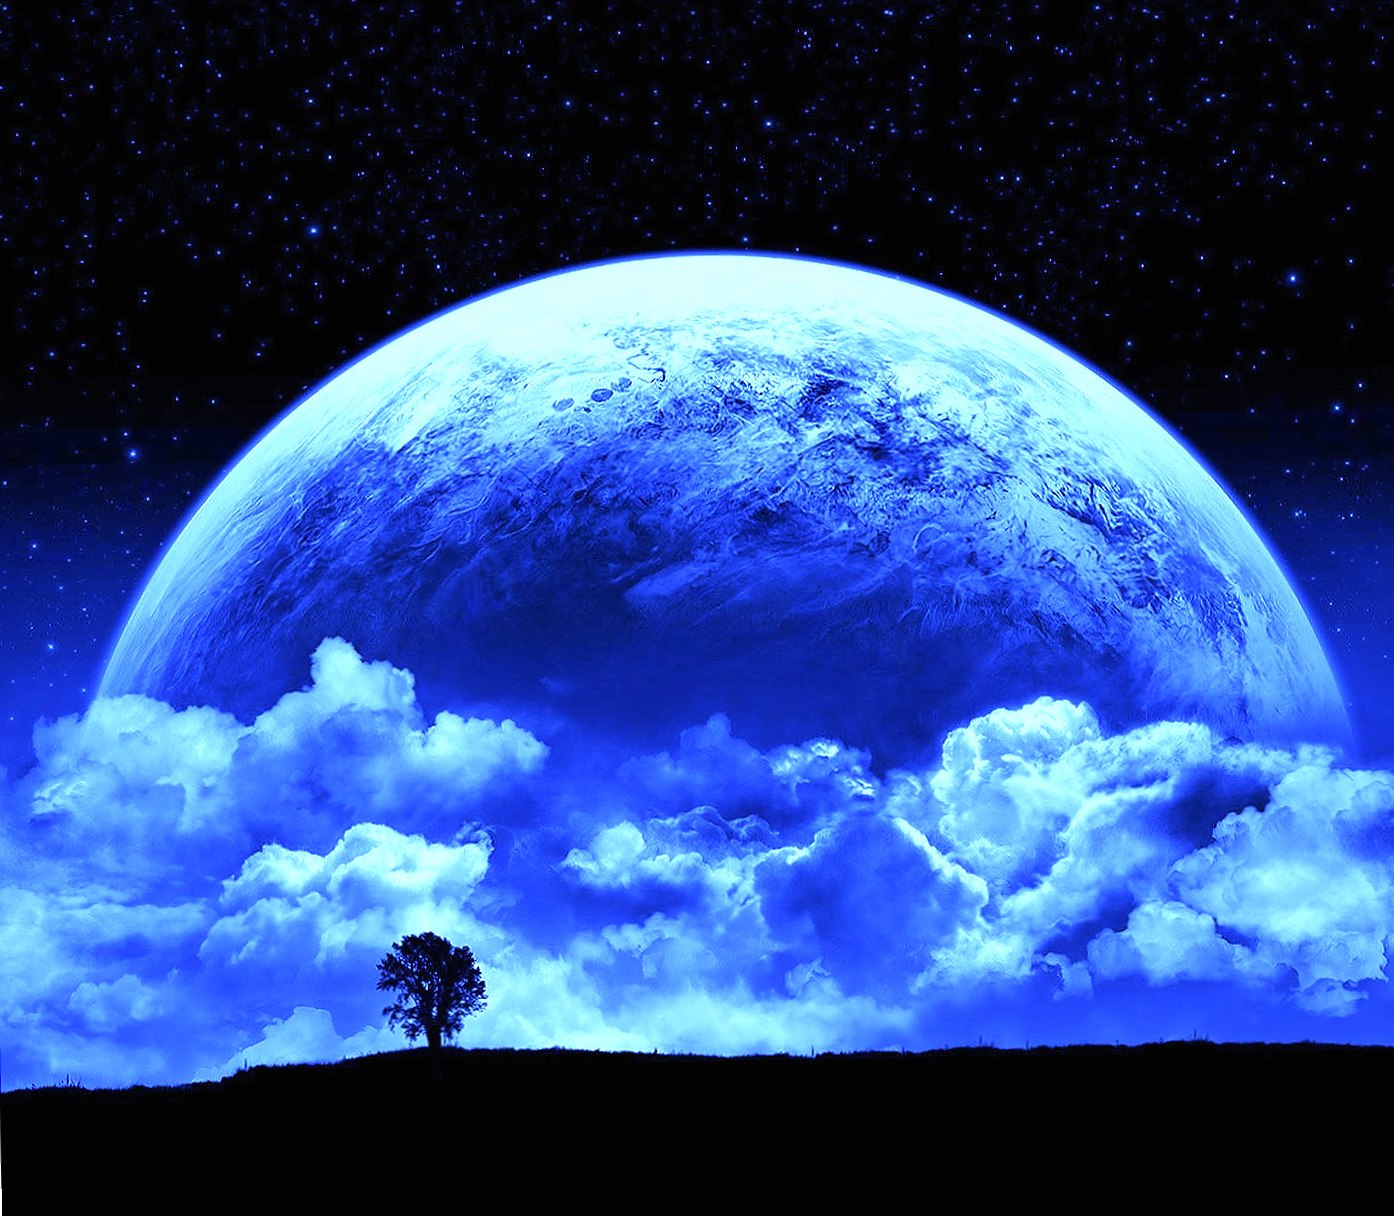 Blue planet wallpaper hd download